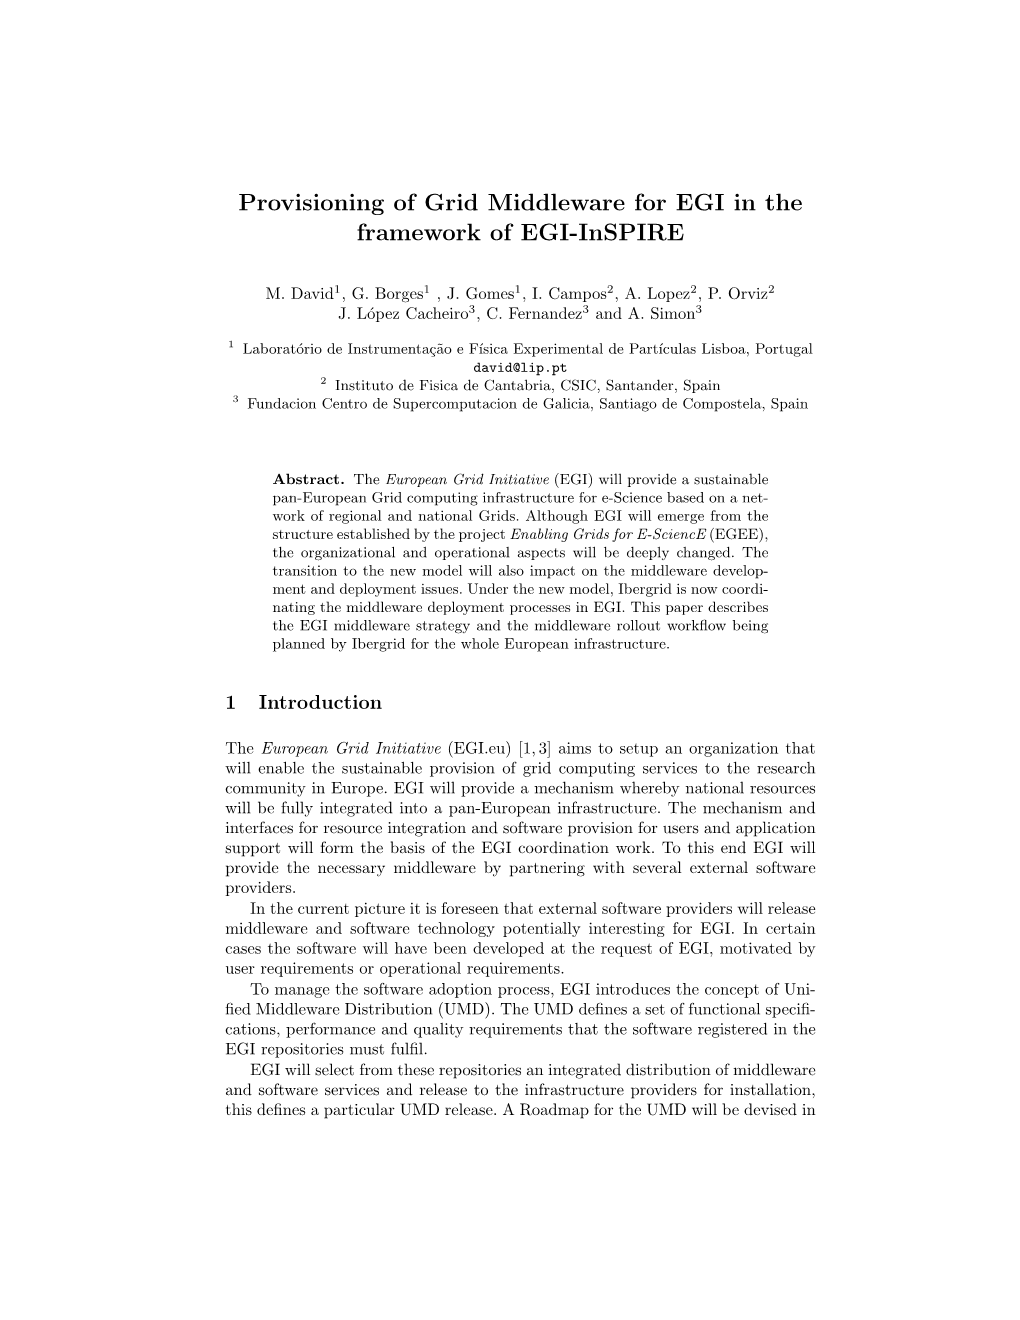 Provisioning of Grid Middleware for EGI in the Framework of EGI-Inspire